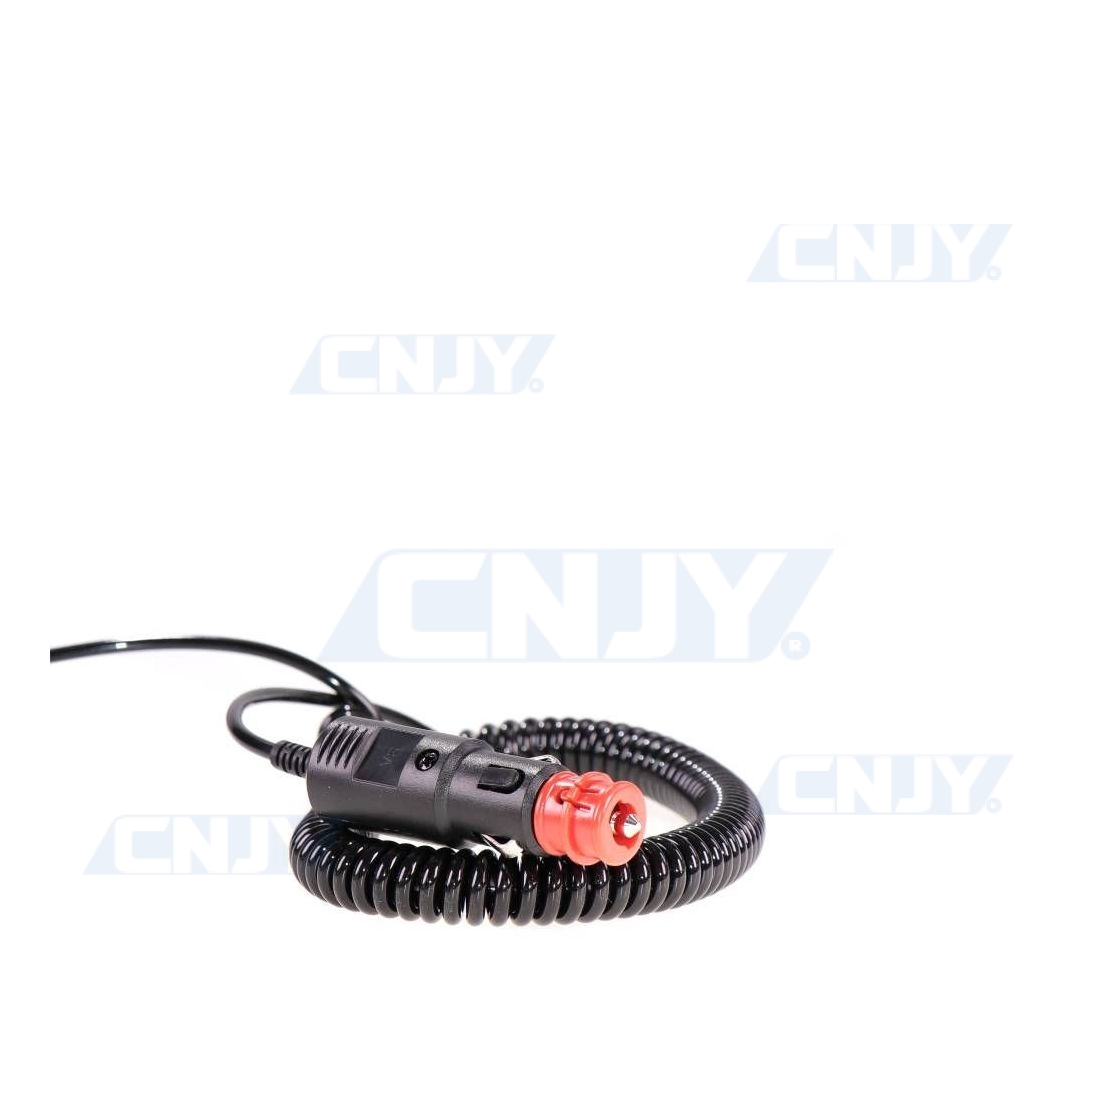 Gyrophare magnétique rond à led 24W rouge avec alimentation par fiche  allume cigare ECE R65 12V 24V.